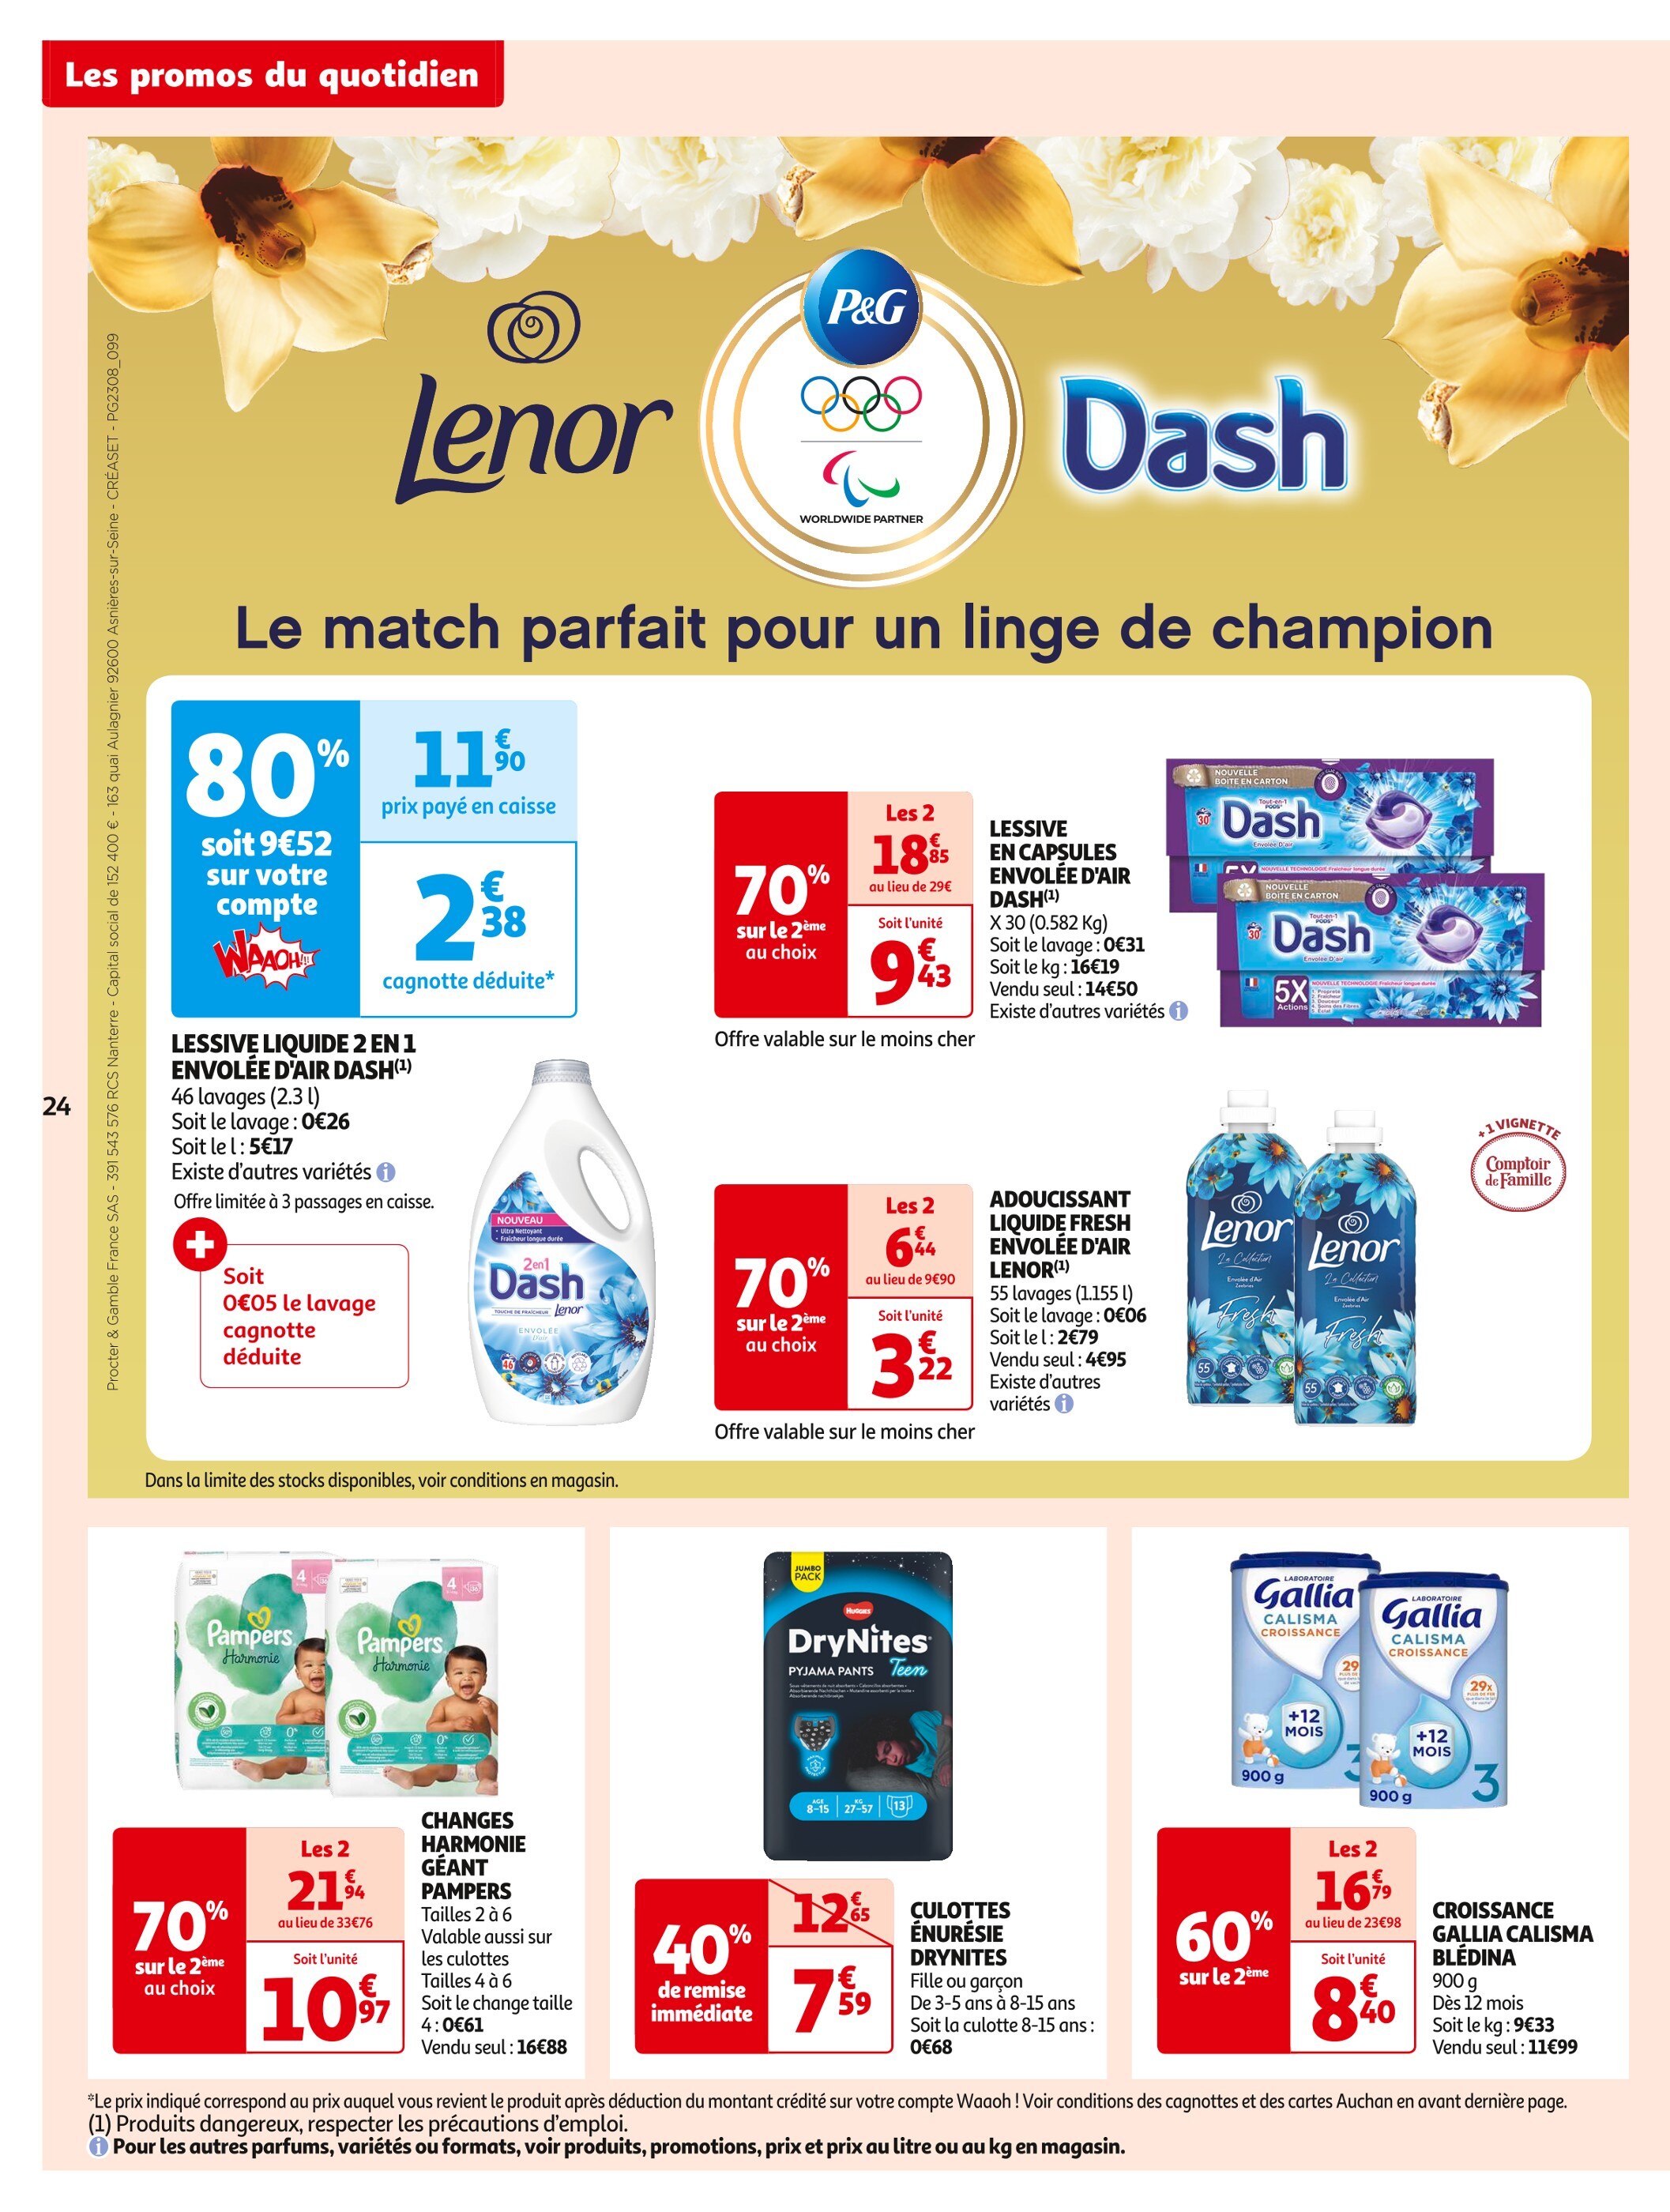 Promo Dash lessive liquide envolée d'air 2en1 chez Casino Supermarchés